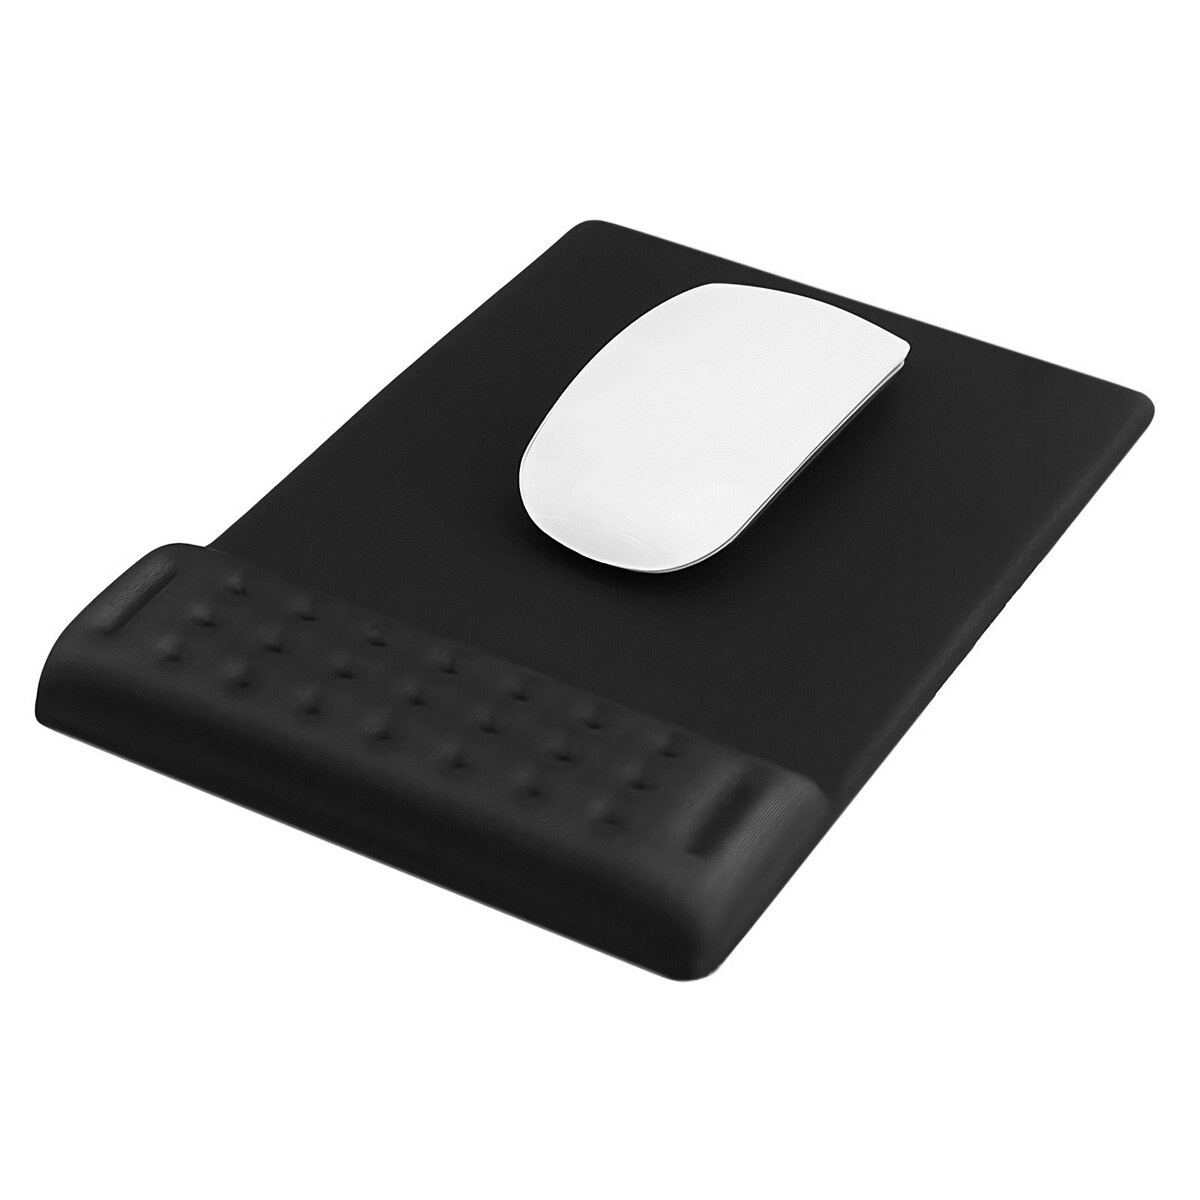 

Waydeer Memory Foam Mouse Pad 220*160mm Nonslip Ergonomic Wrist Rest Anti-skid Wrist Pad Wrist Support for Home Office